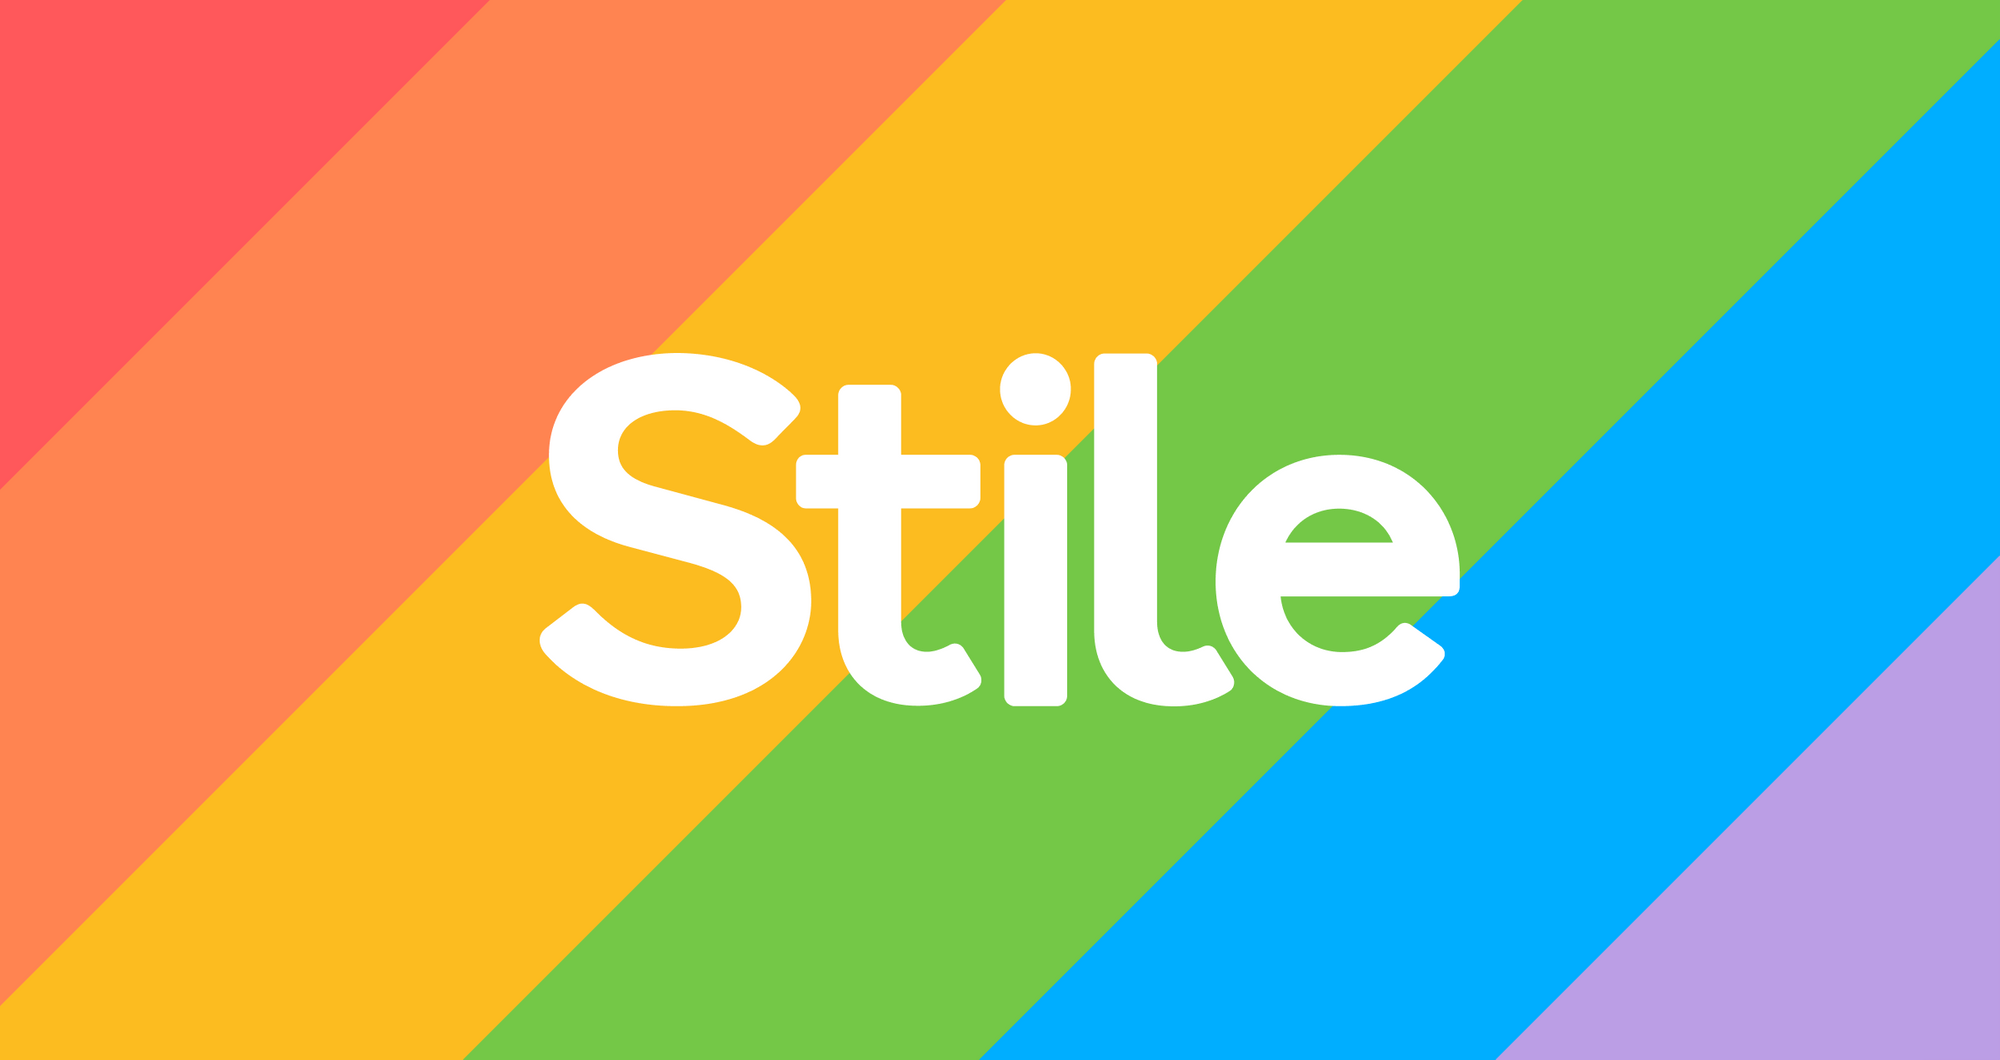 Celebrating Pride Month at Stile